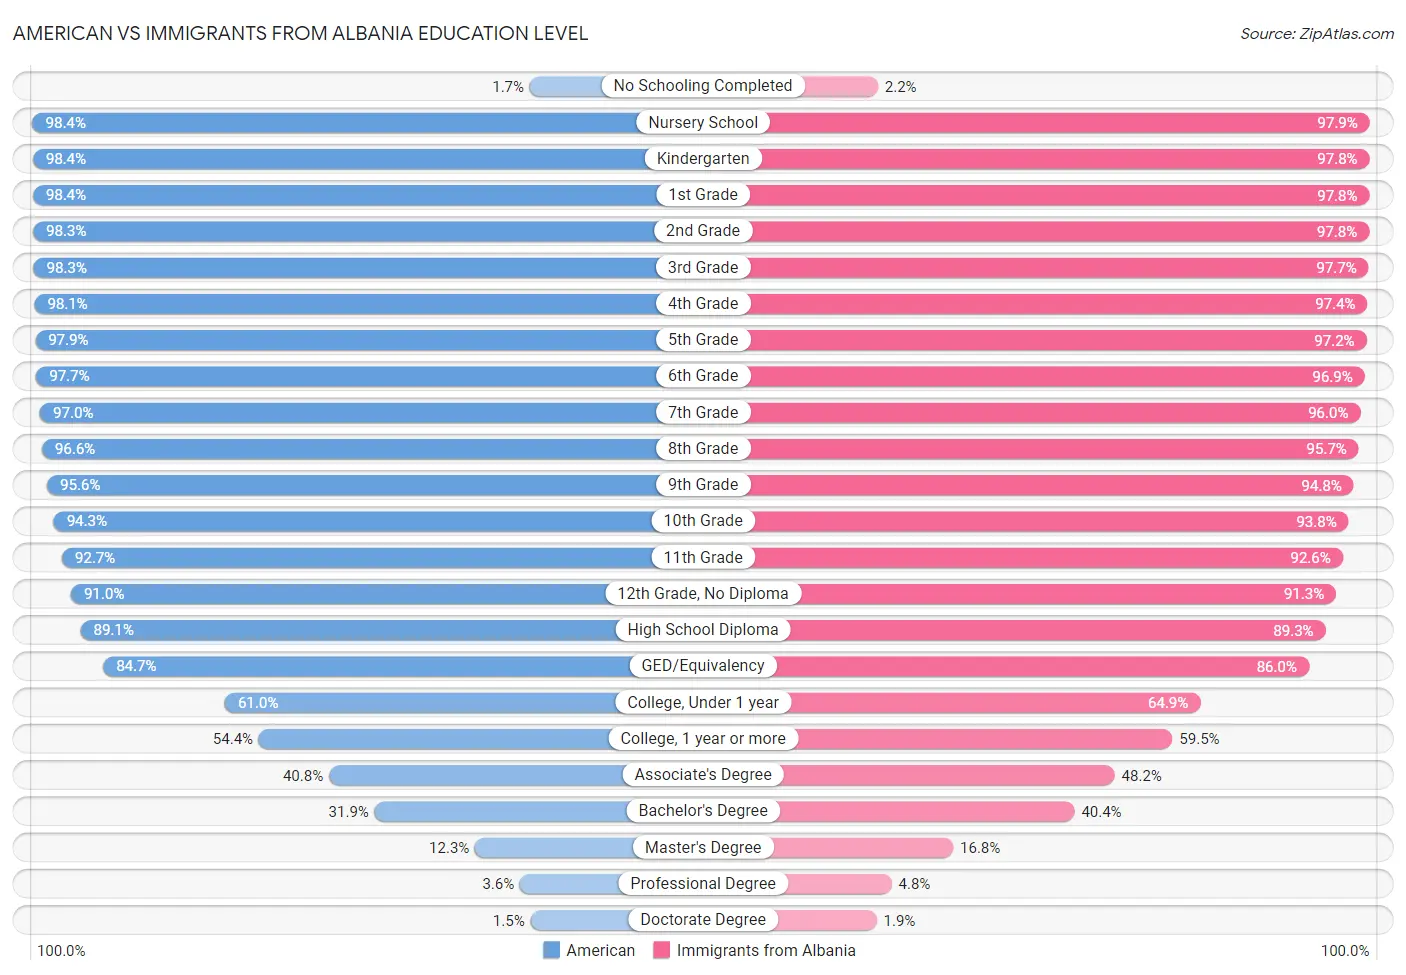 American vs Immigrants from Albania Education Level